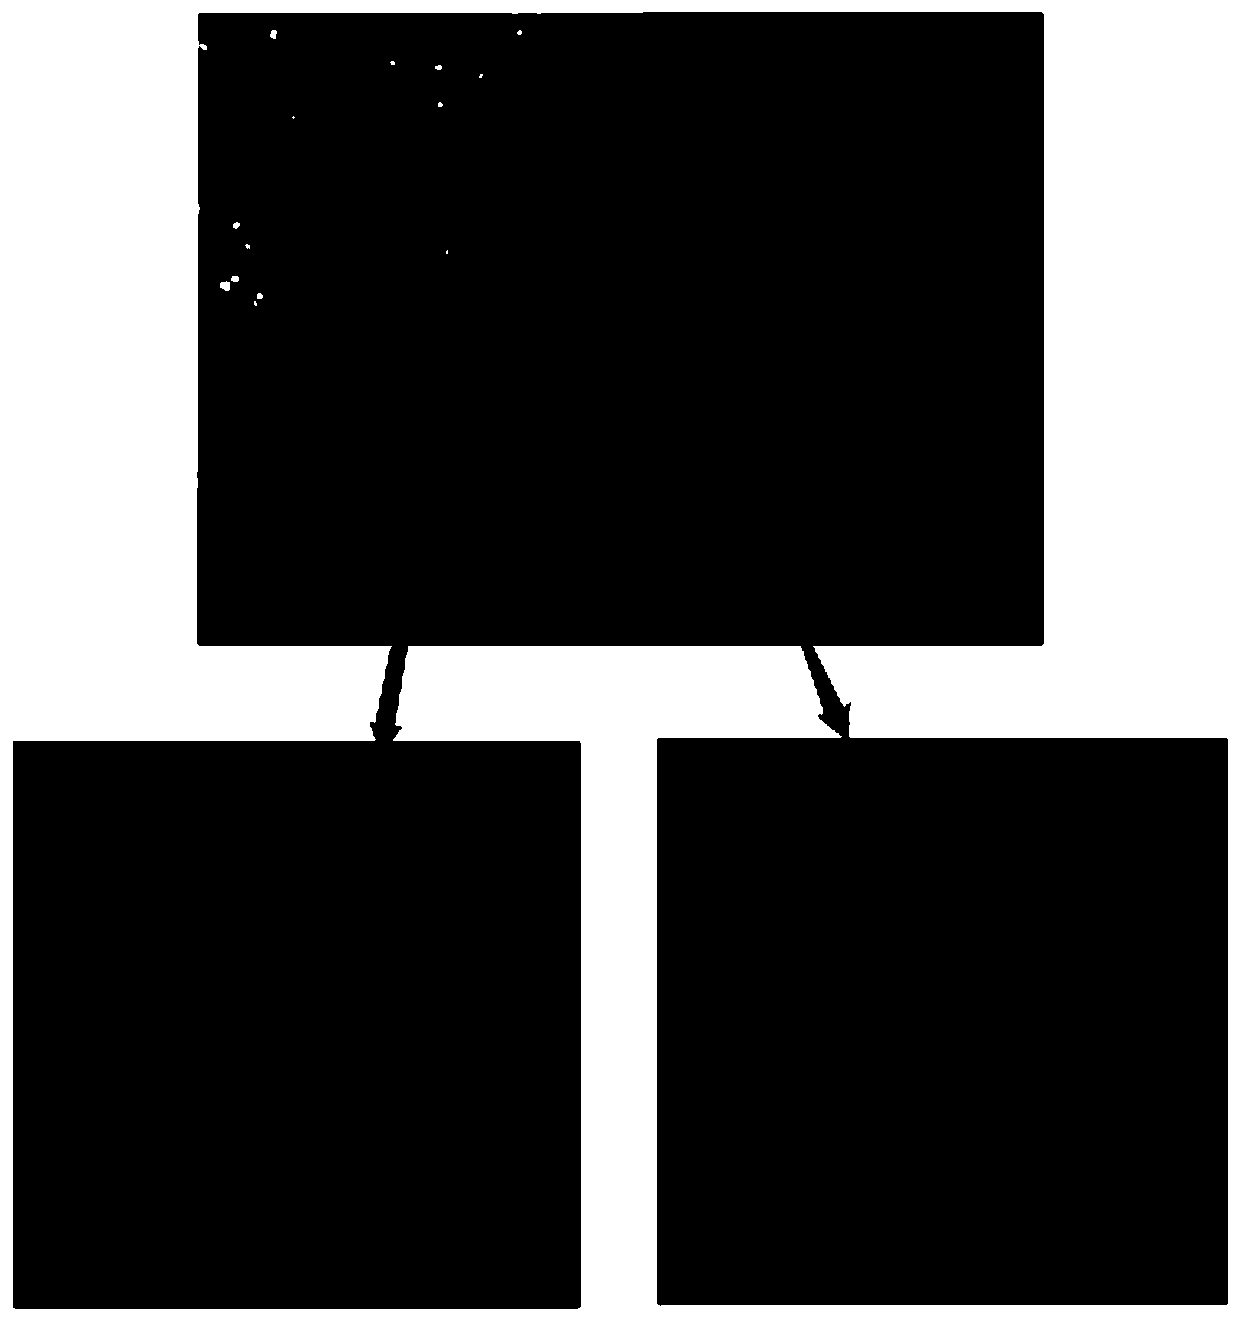 Multi-target segmentation method for illumination non-uniform image